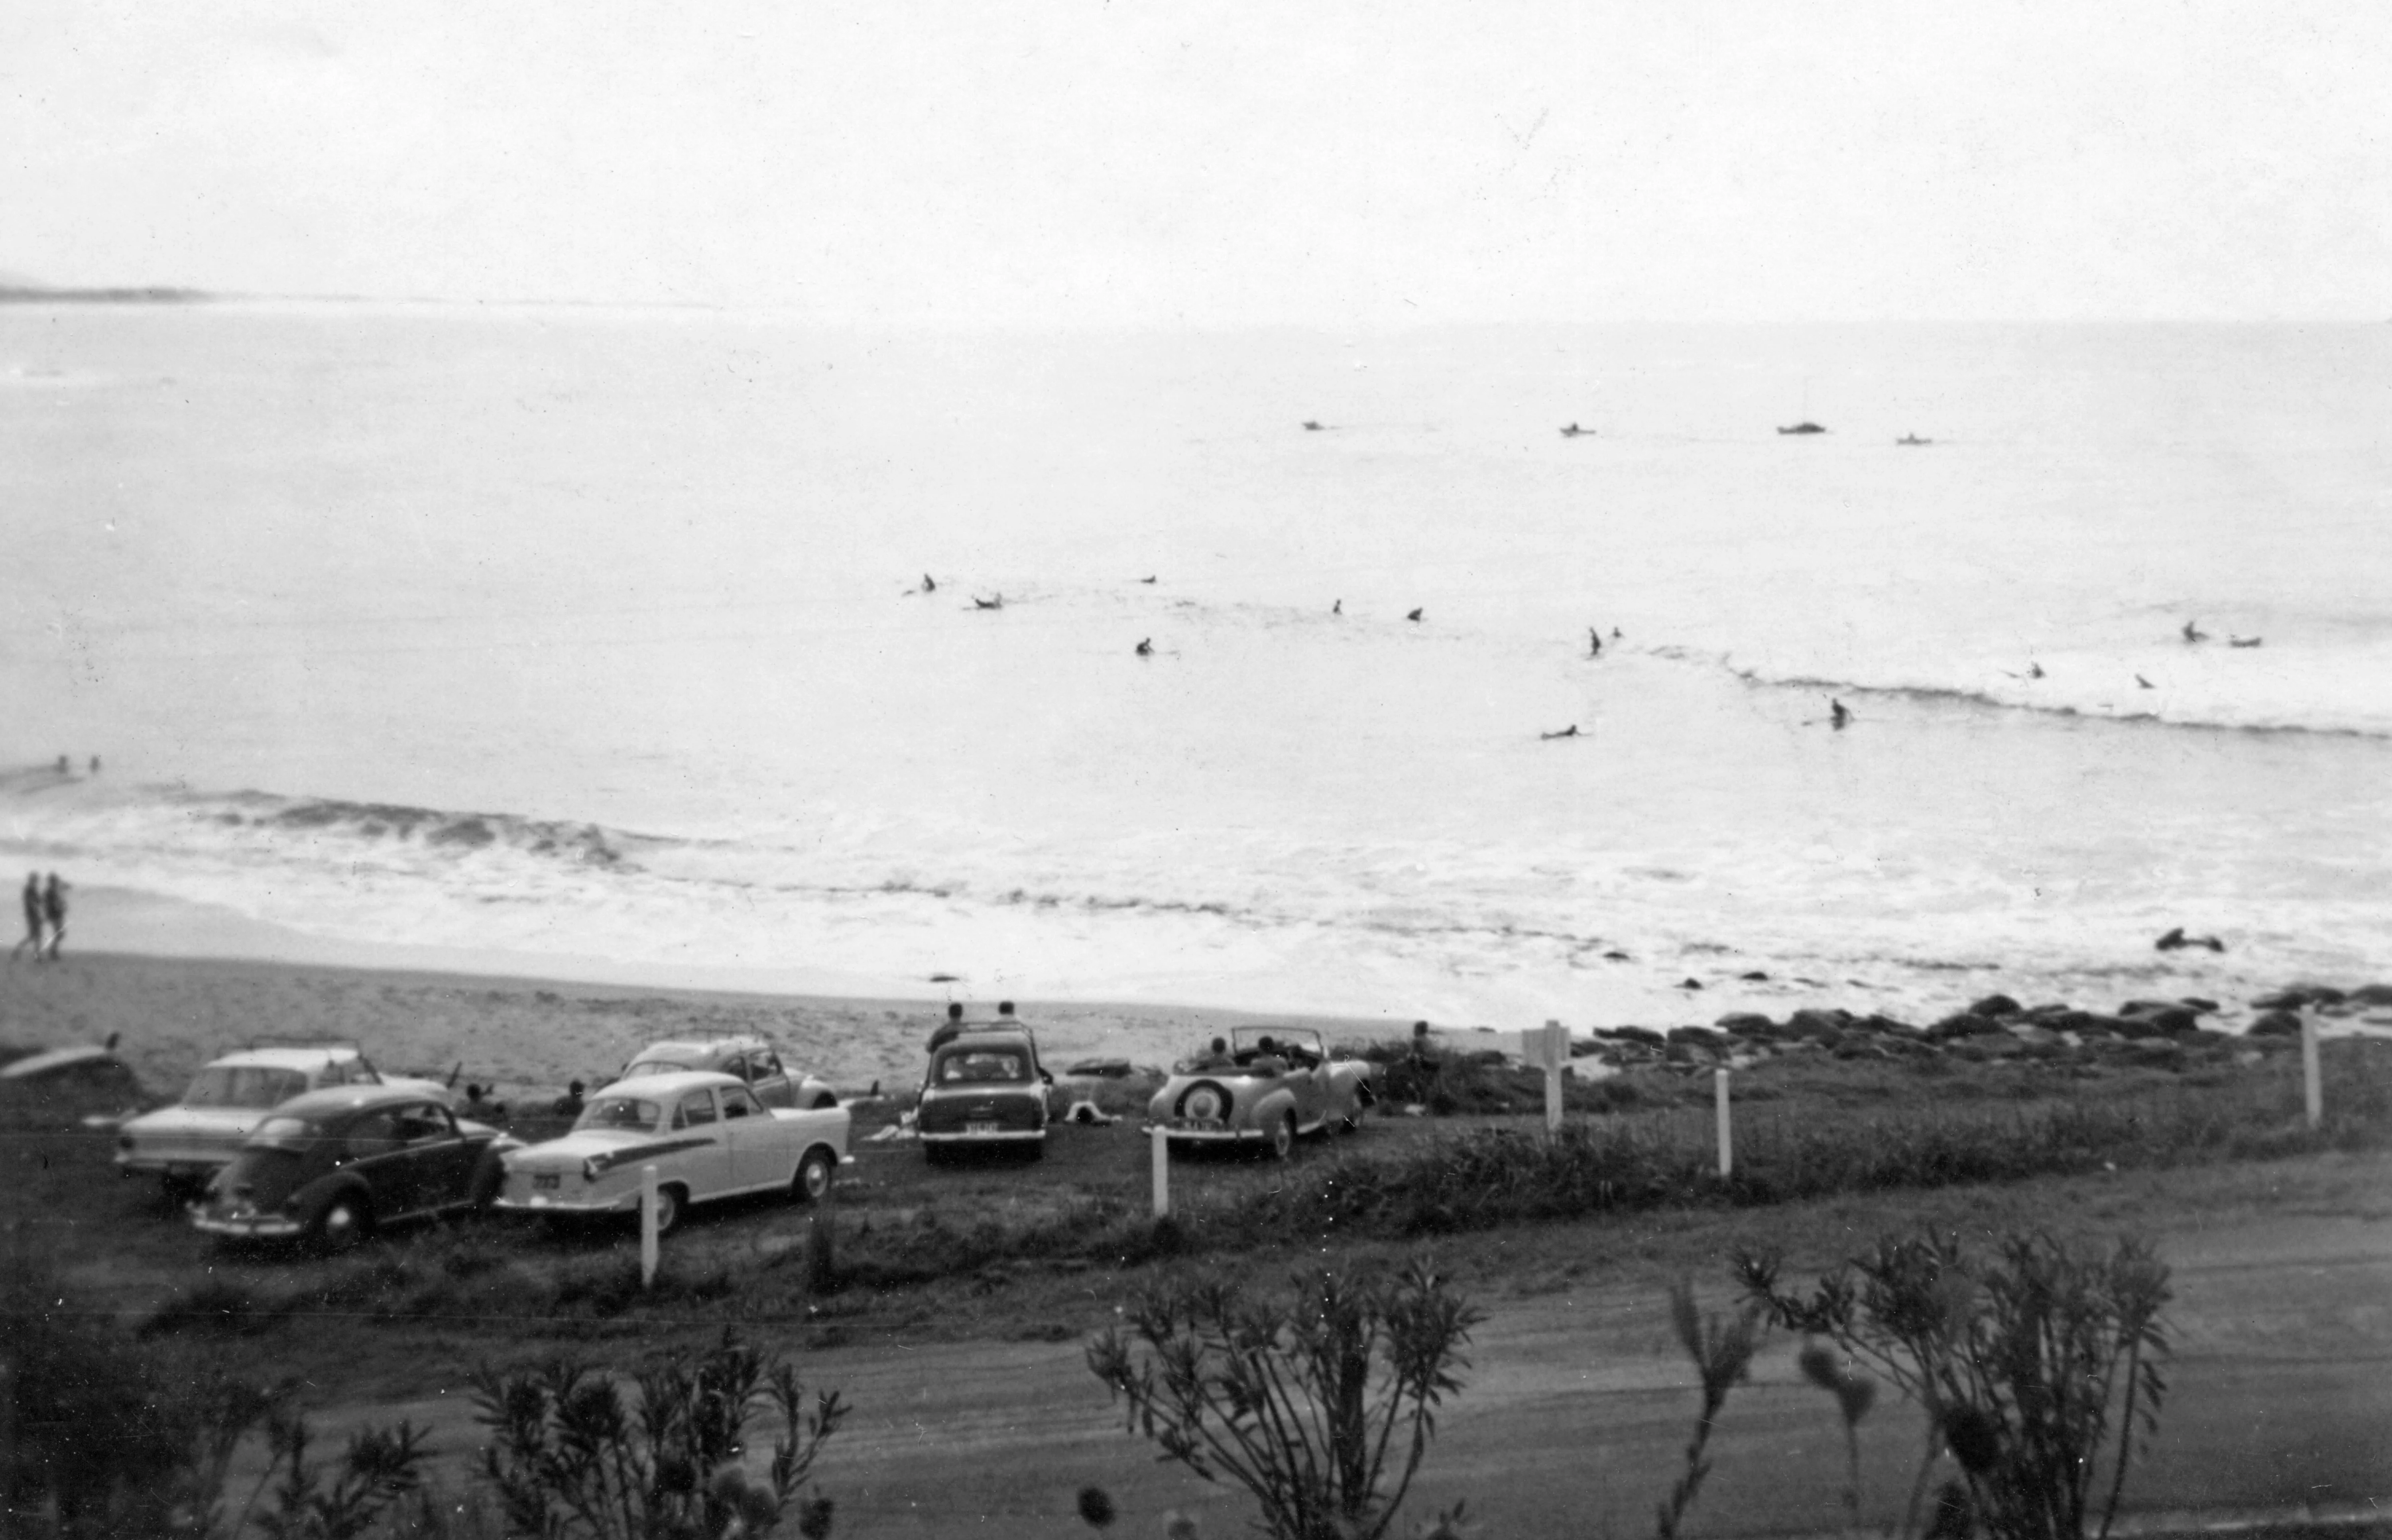 Board riders surfing at Moffat Beach, Caloundra, circa 1965 